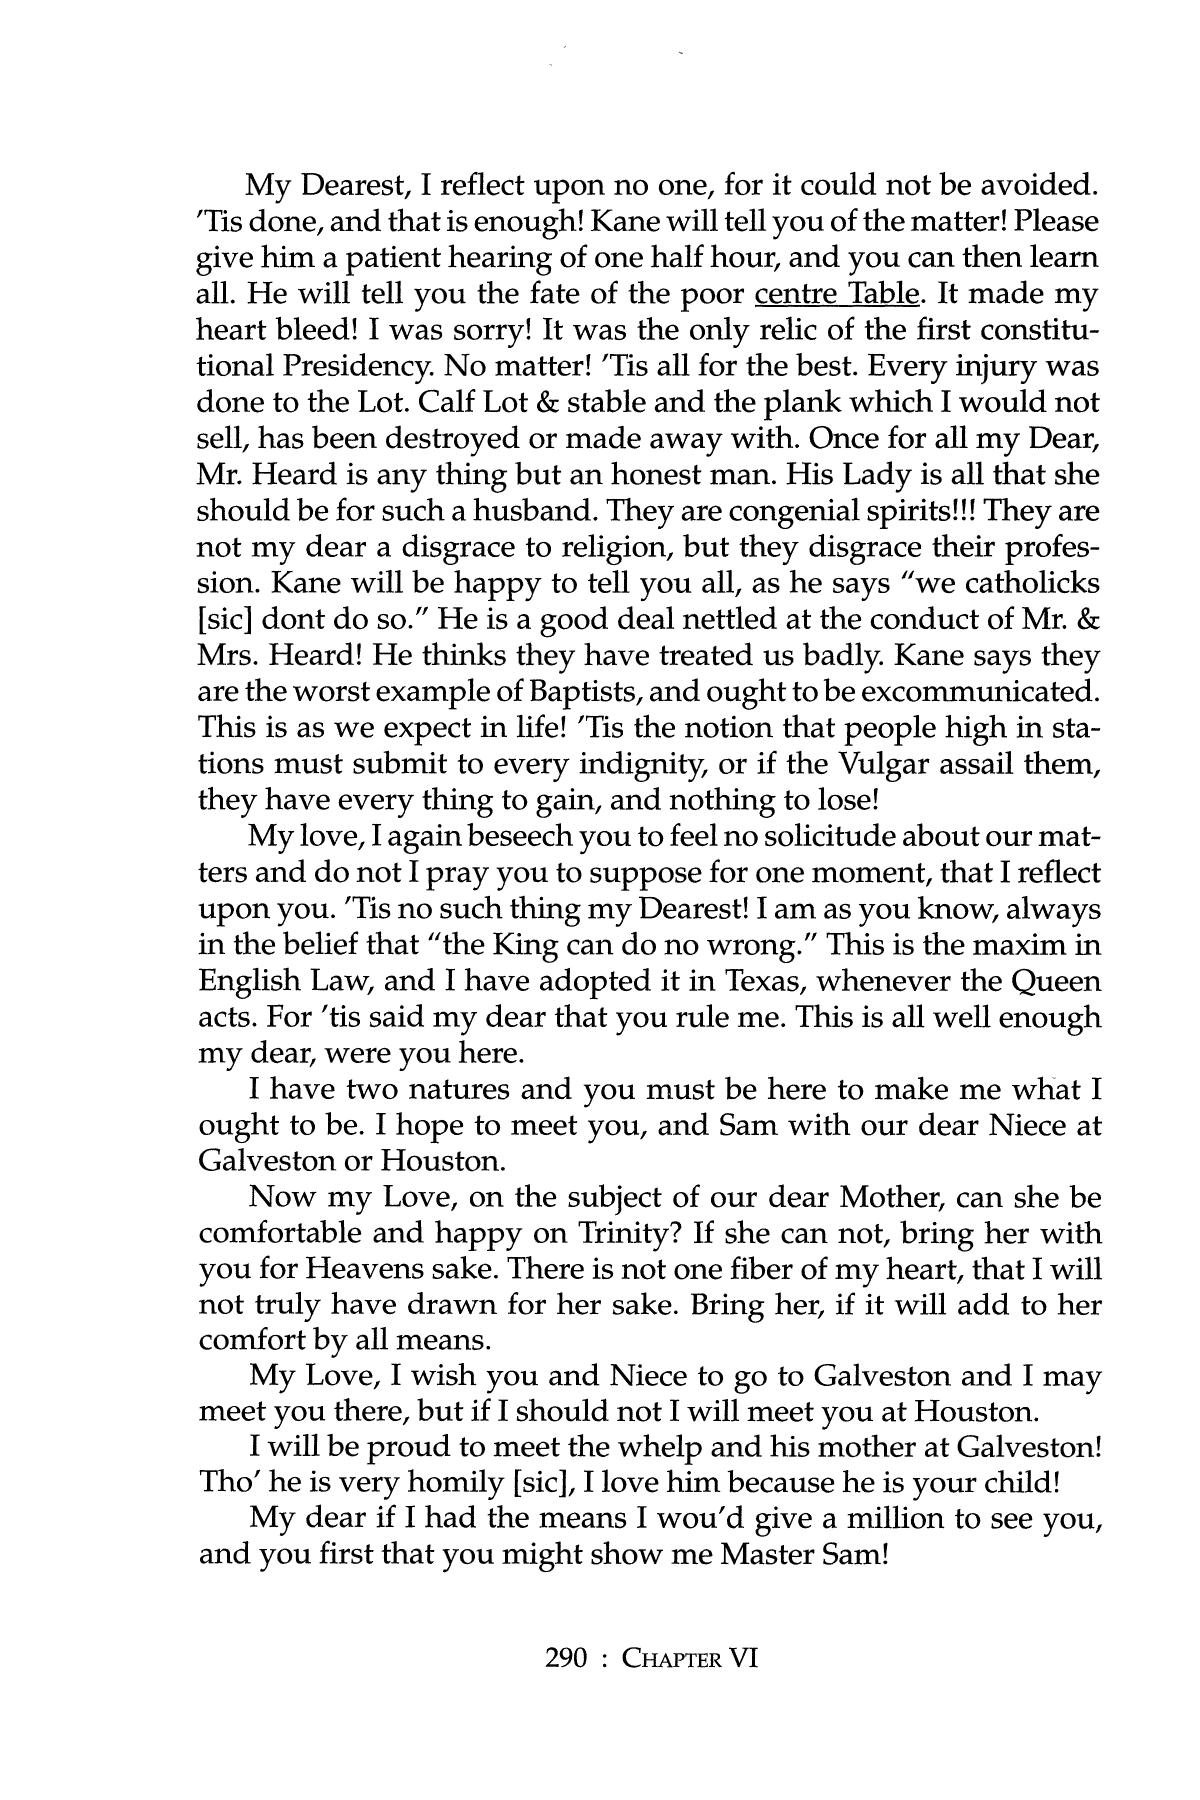 The Personal Correspondence of Sam Houston, Volume 1: 1839-1845
                                                
                                                    290
                                                